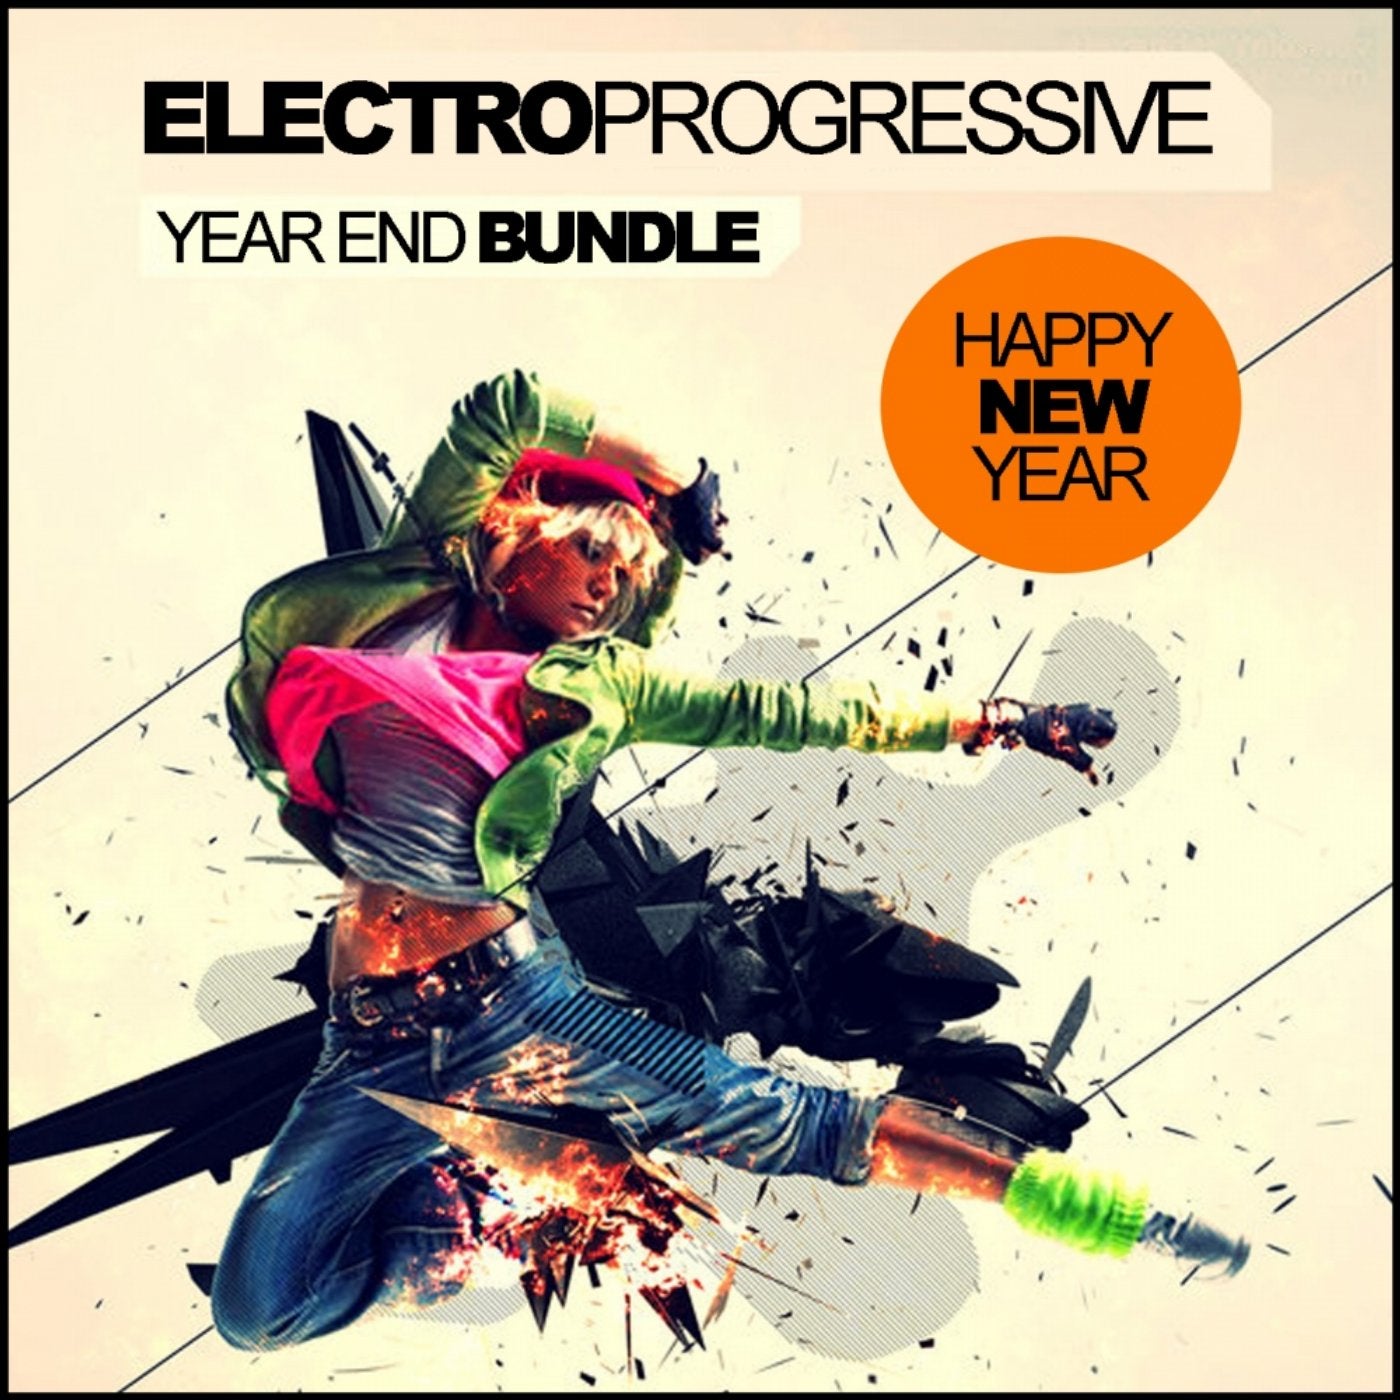 ElectroProgressive Year End Bundle: Happy New Year